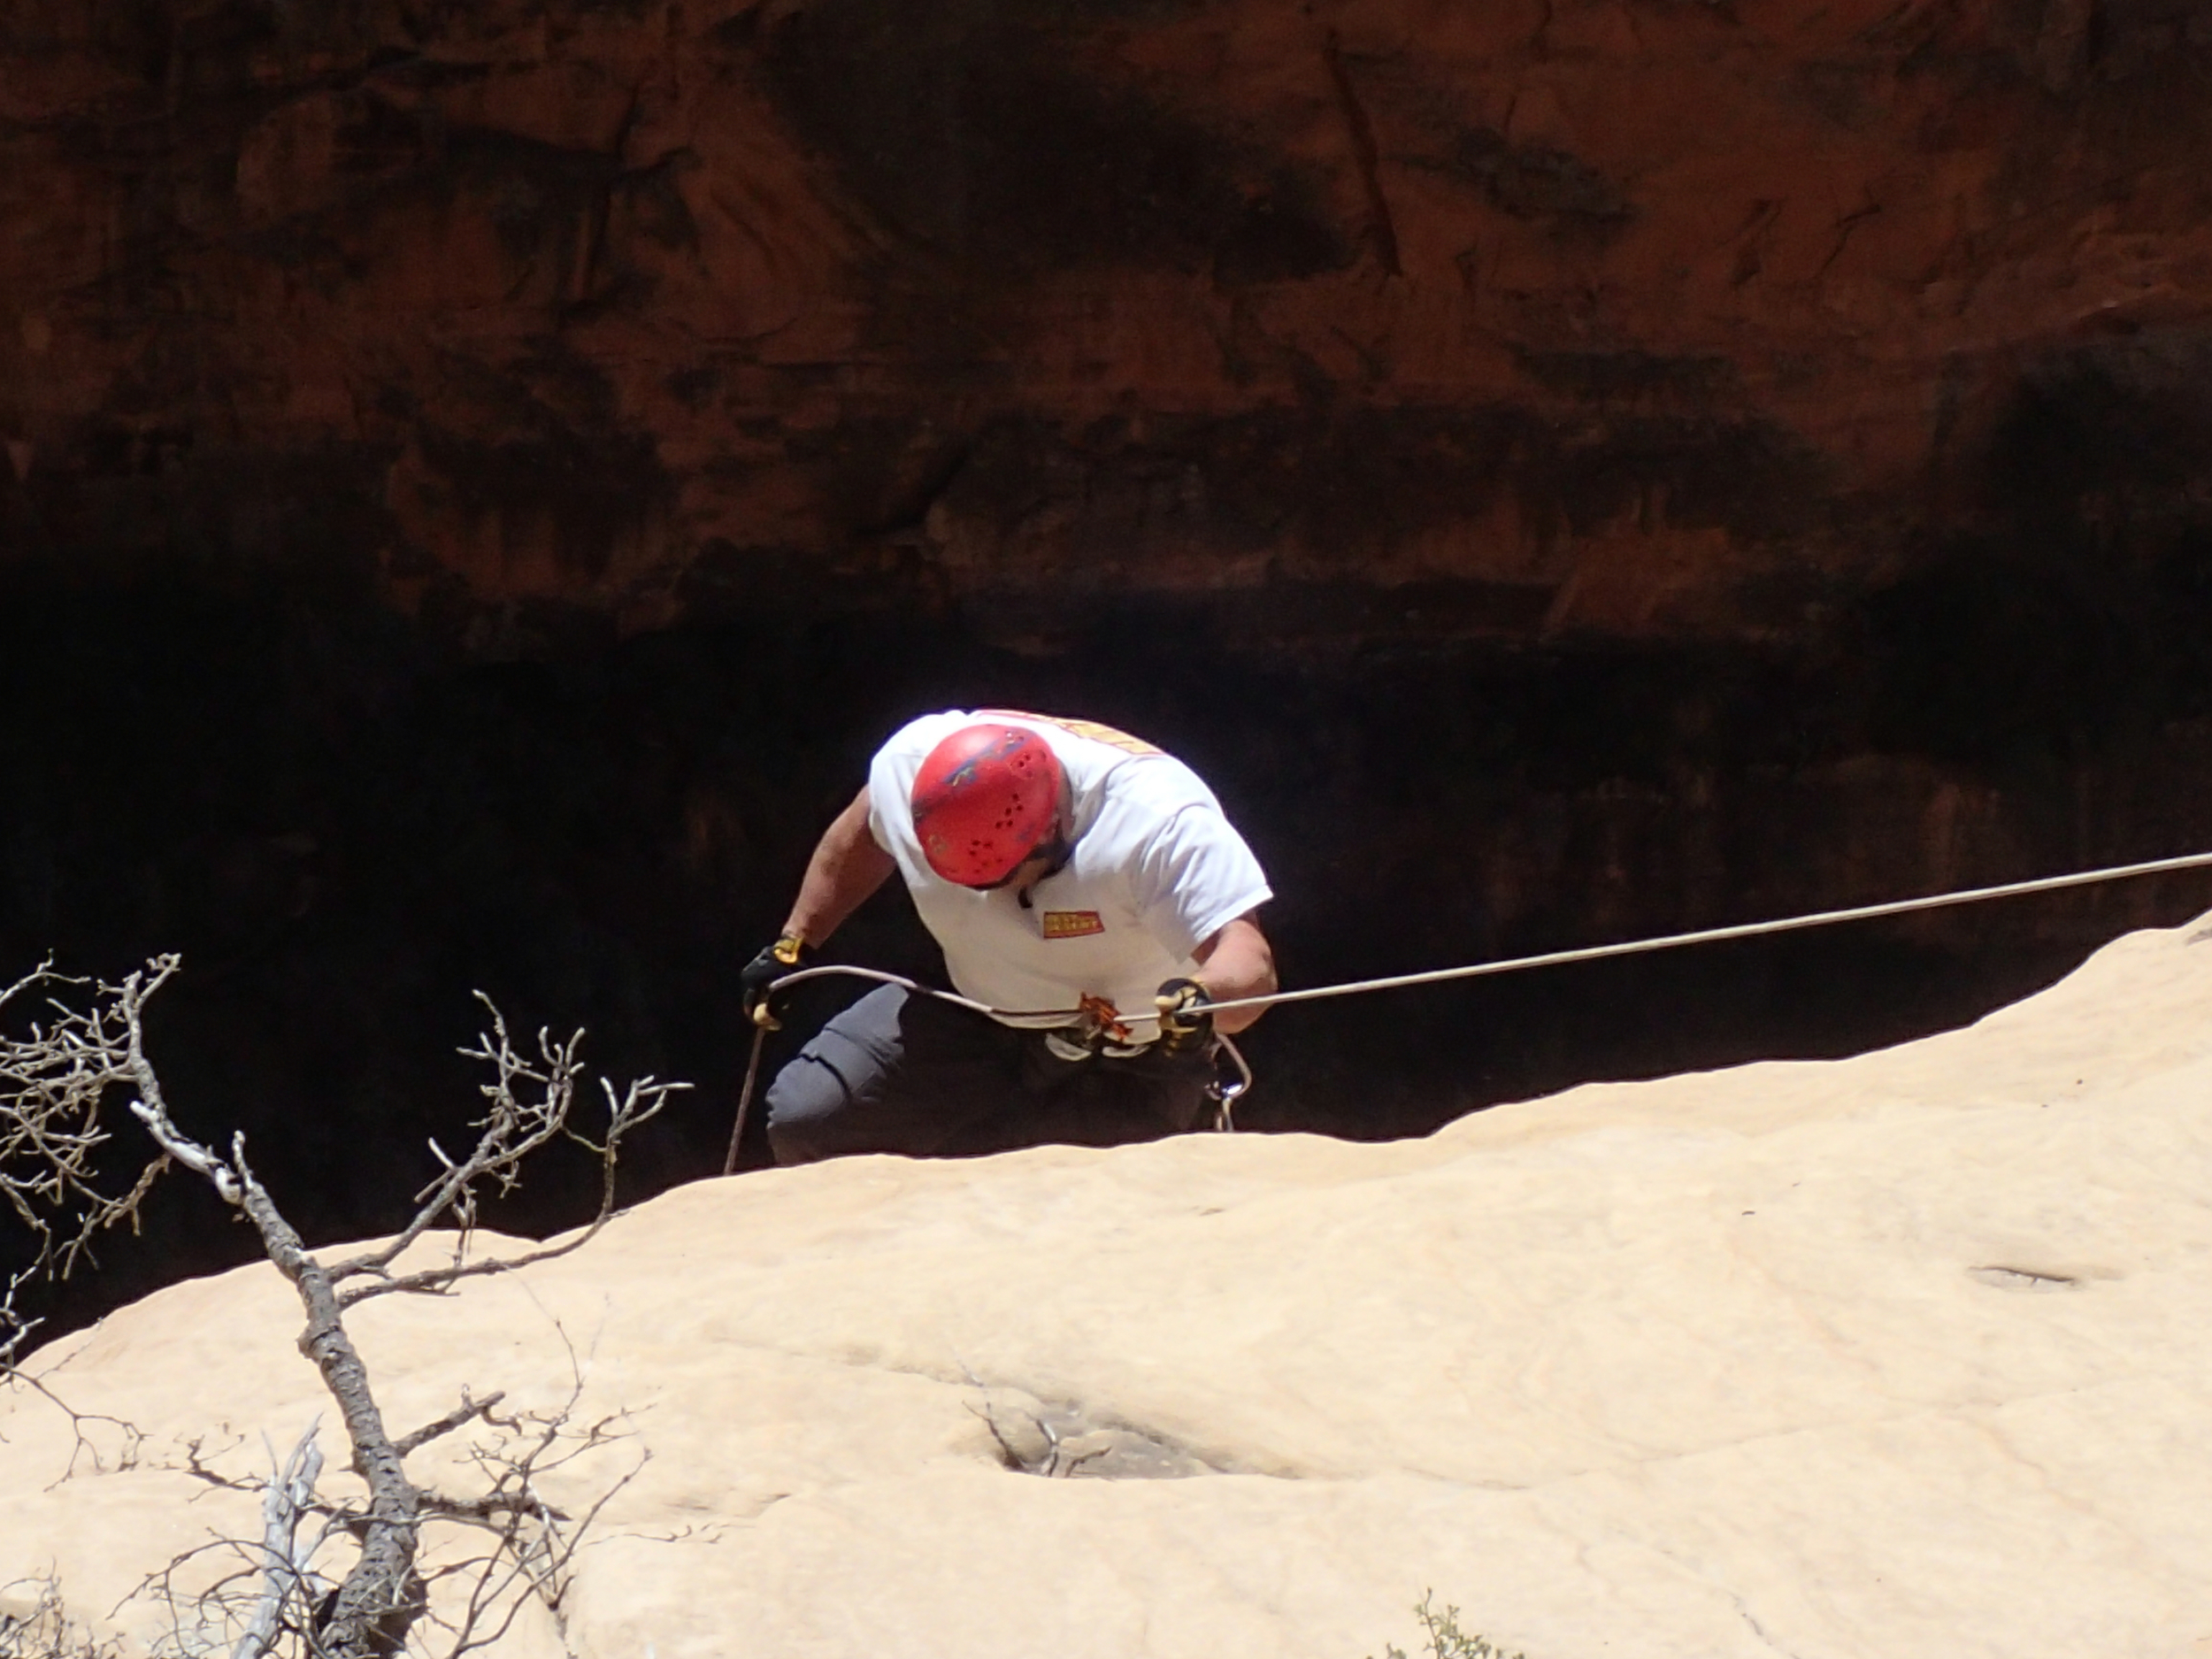 Mormon Canyon, AZ - On Rope Canyoneering